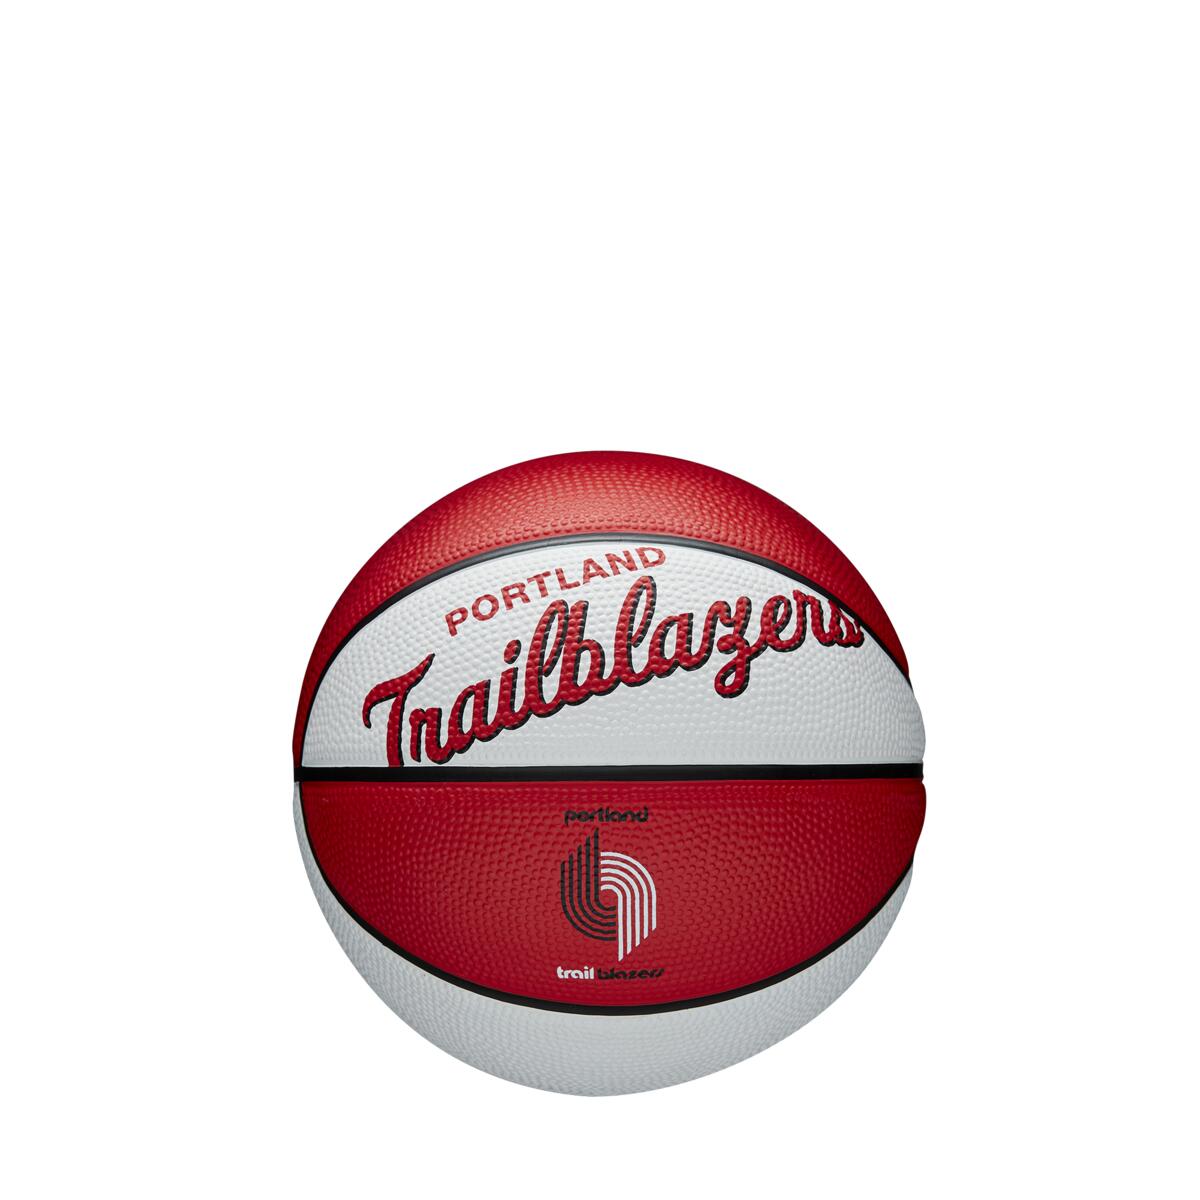 Wilson 共用 スポーツ用品 Hawks Team Tribute バスケットボール 